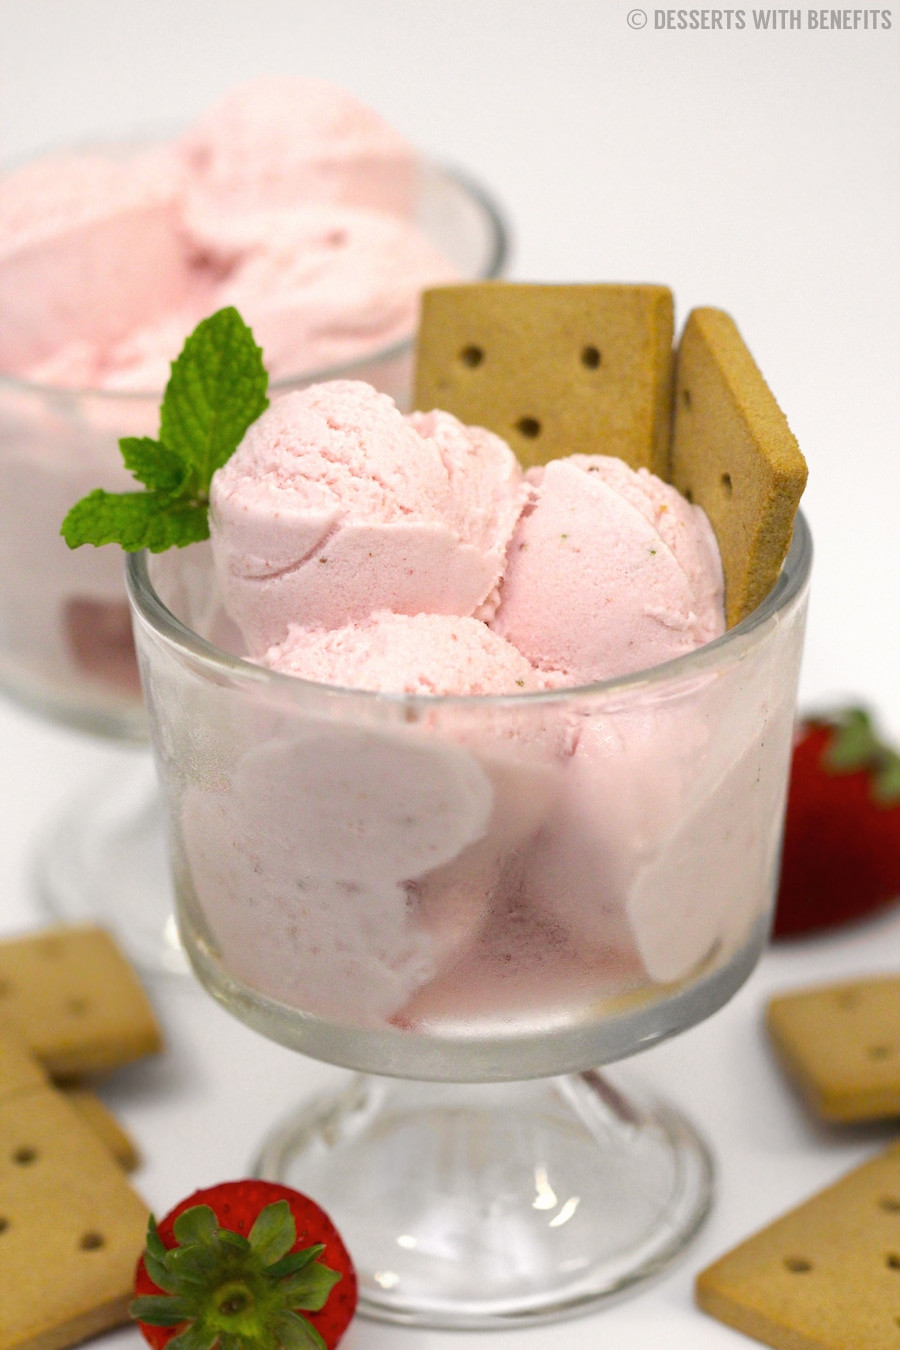 Low Fat Sugar Free Desserts
 Healthy Strawberries and Cream Ice Cream sugar free low fat